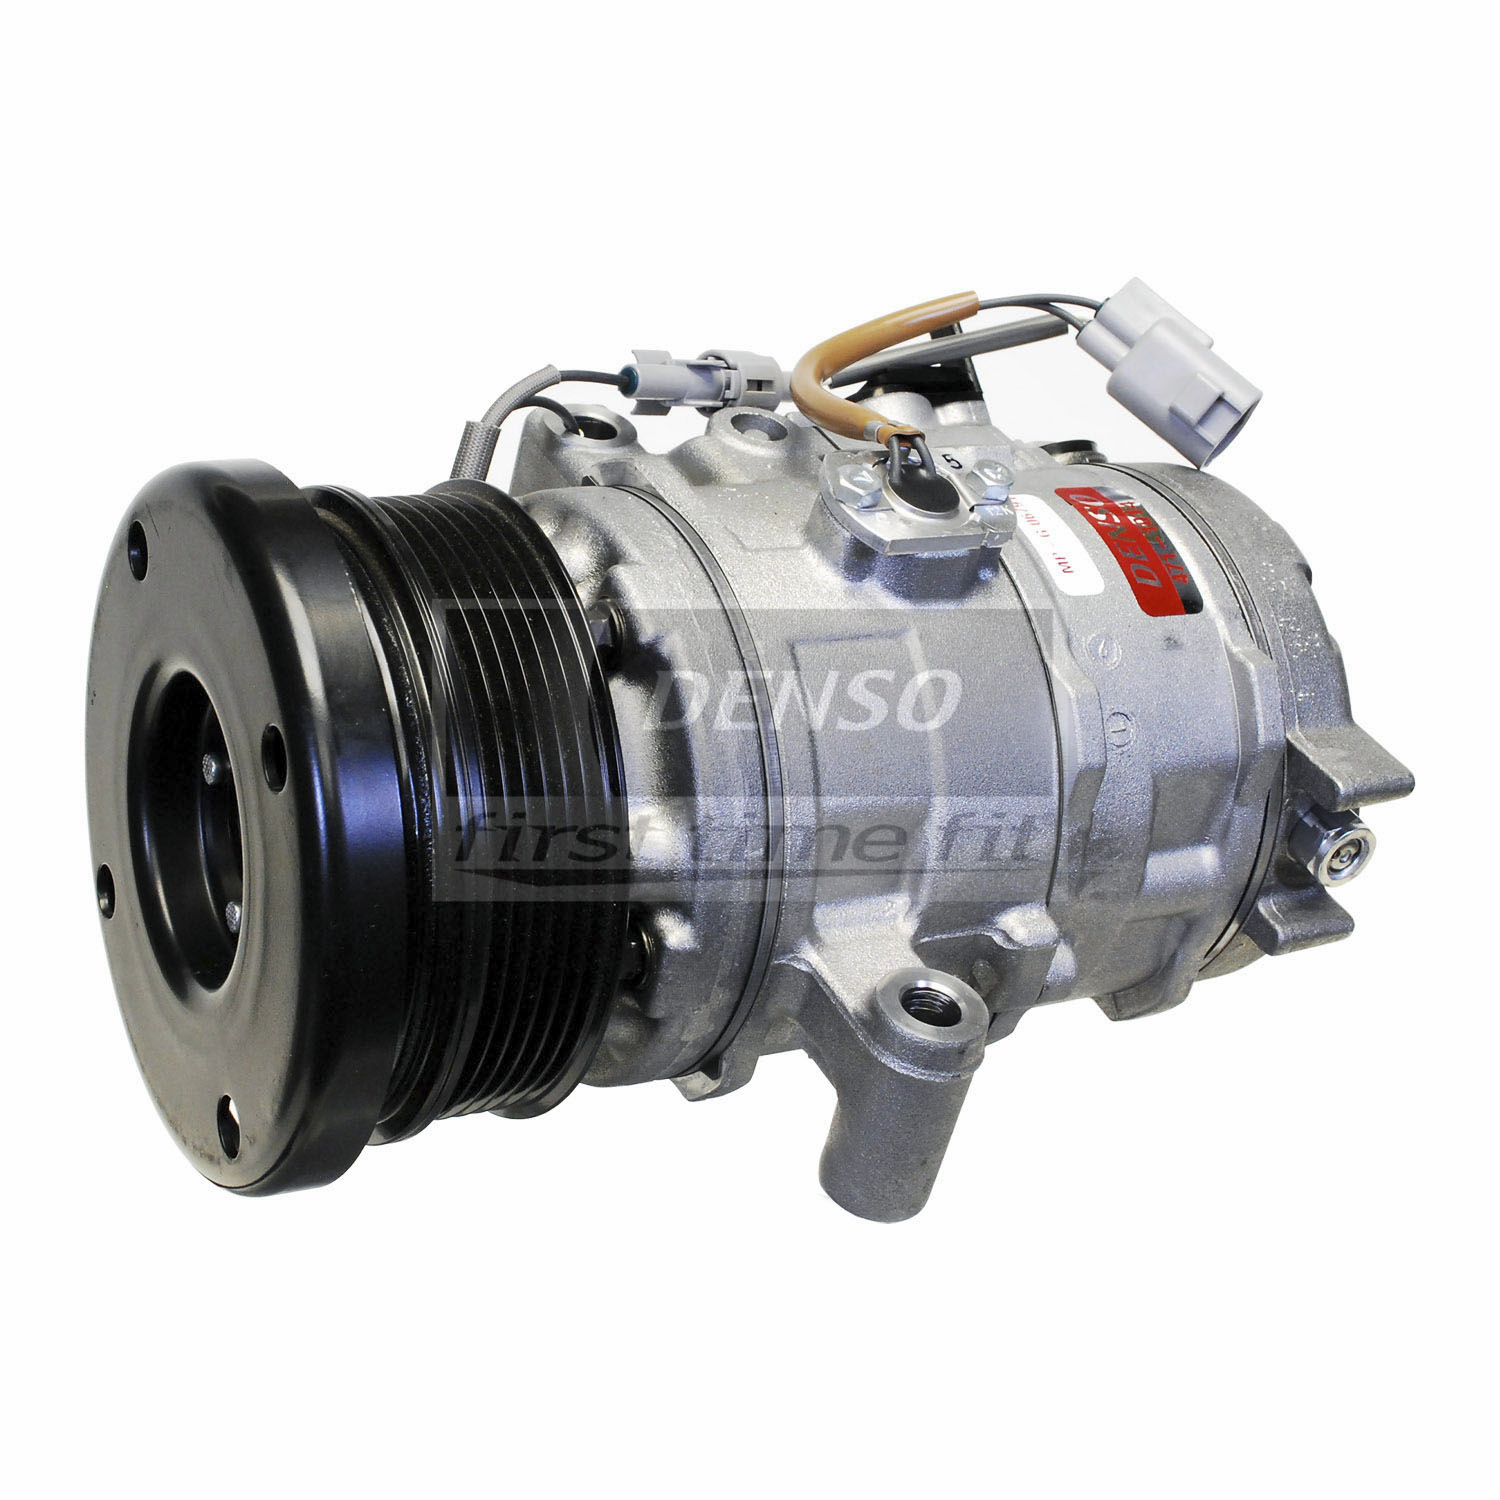 TCW Platinum Compressor 32820.6T1NIP New Product Image field_60b6a13a6e67c